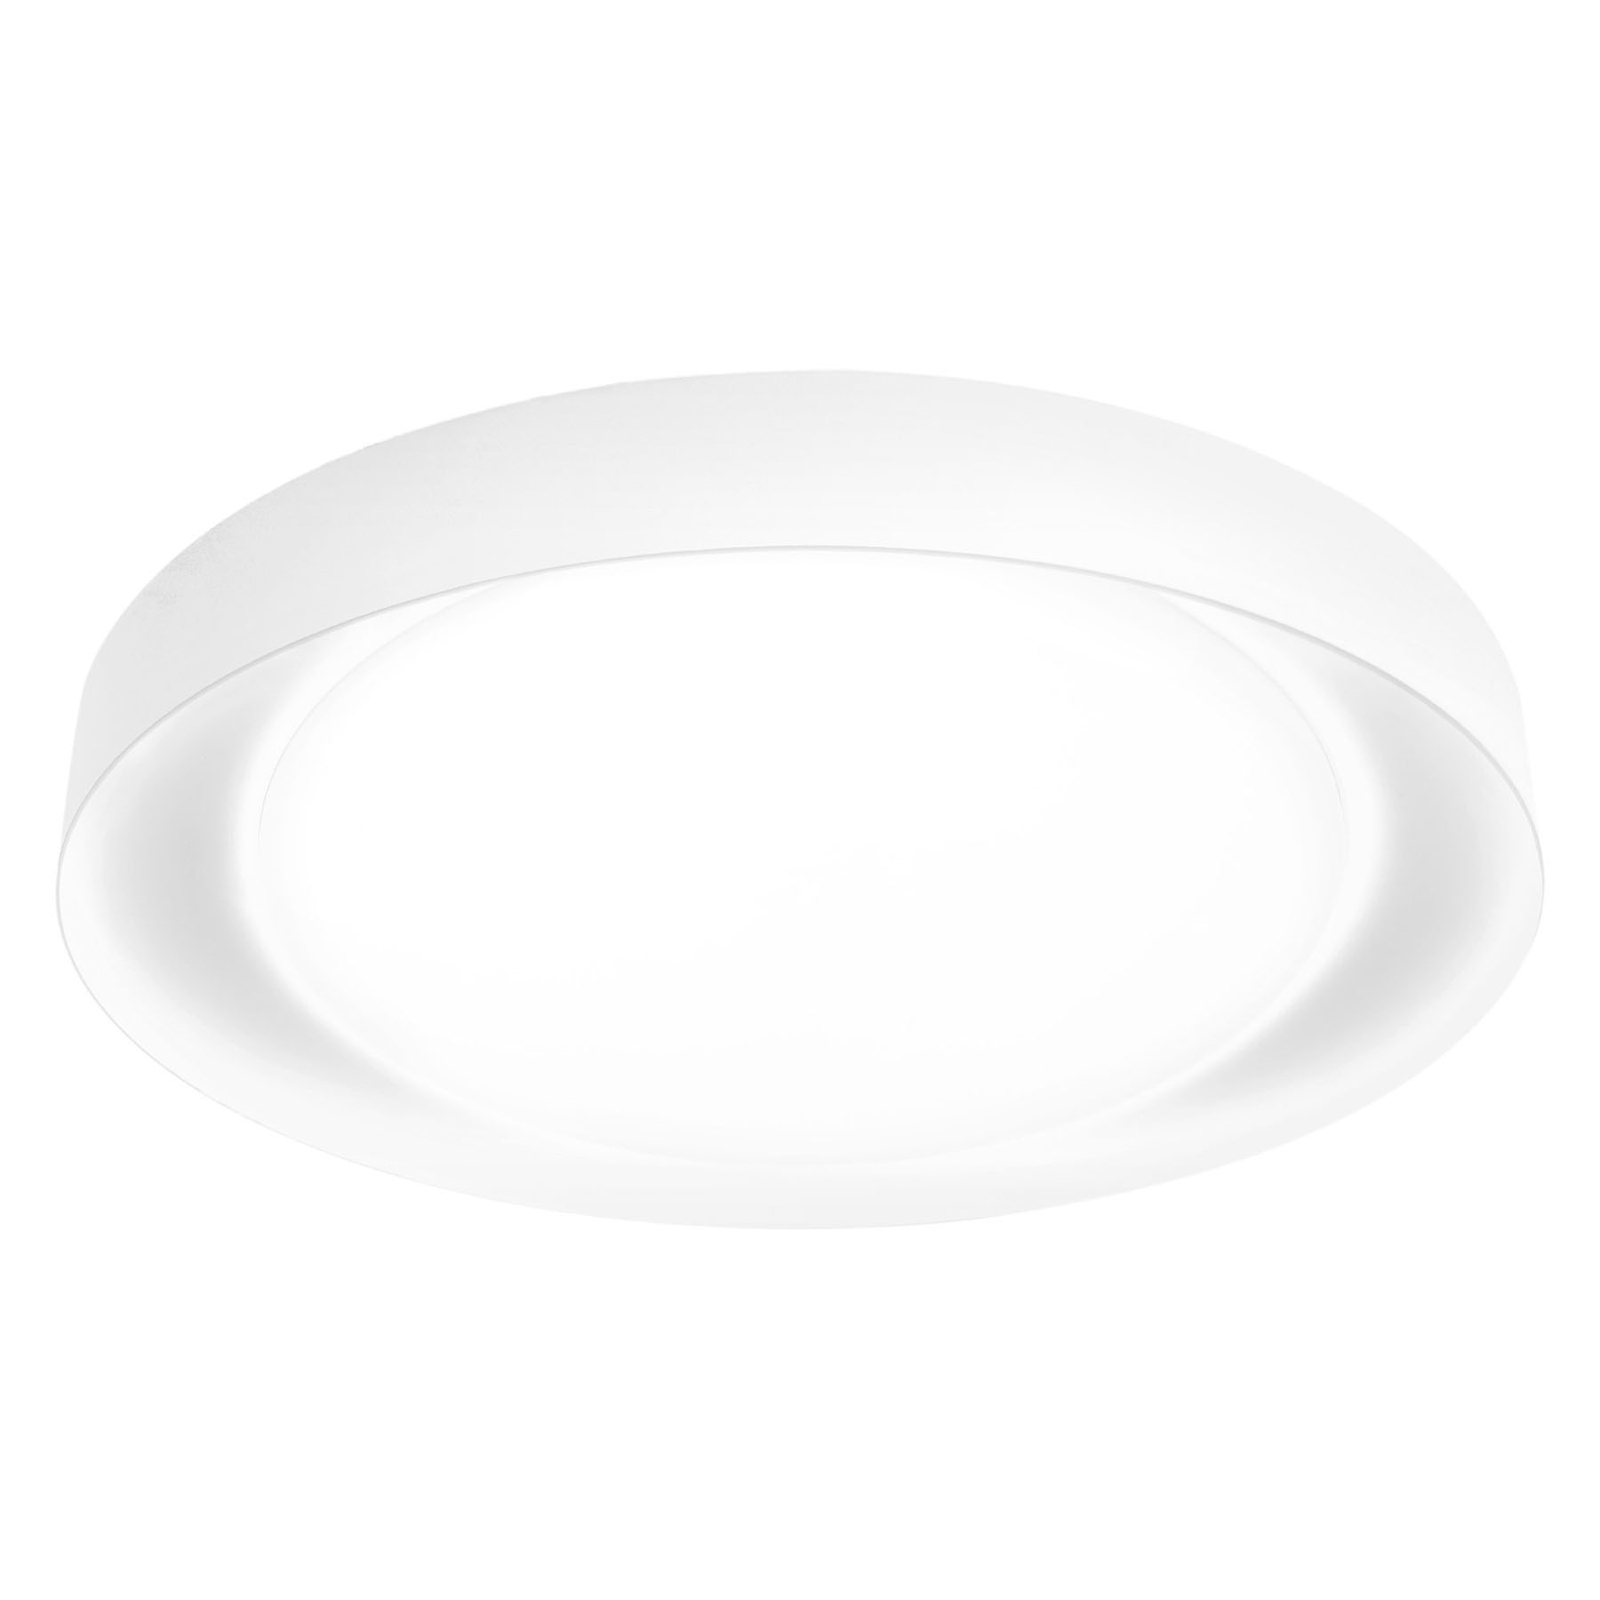 LEDVANCE SMART+ WiFi Orbis Eye CCT 49cm wit